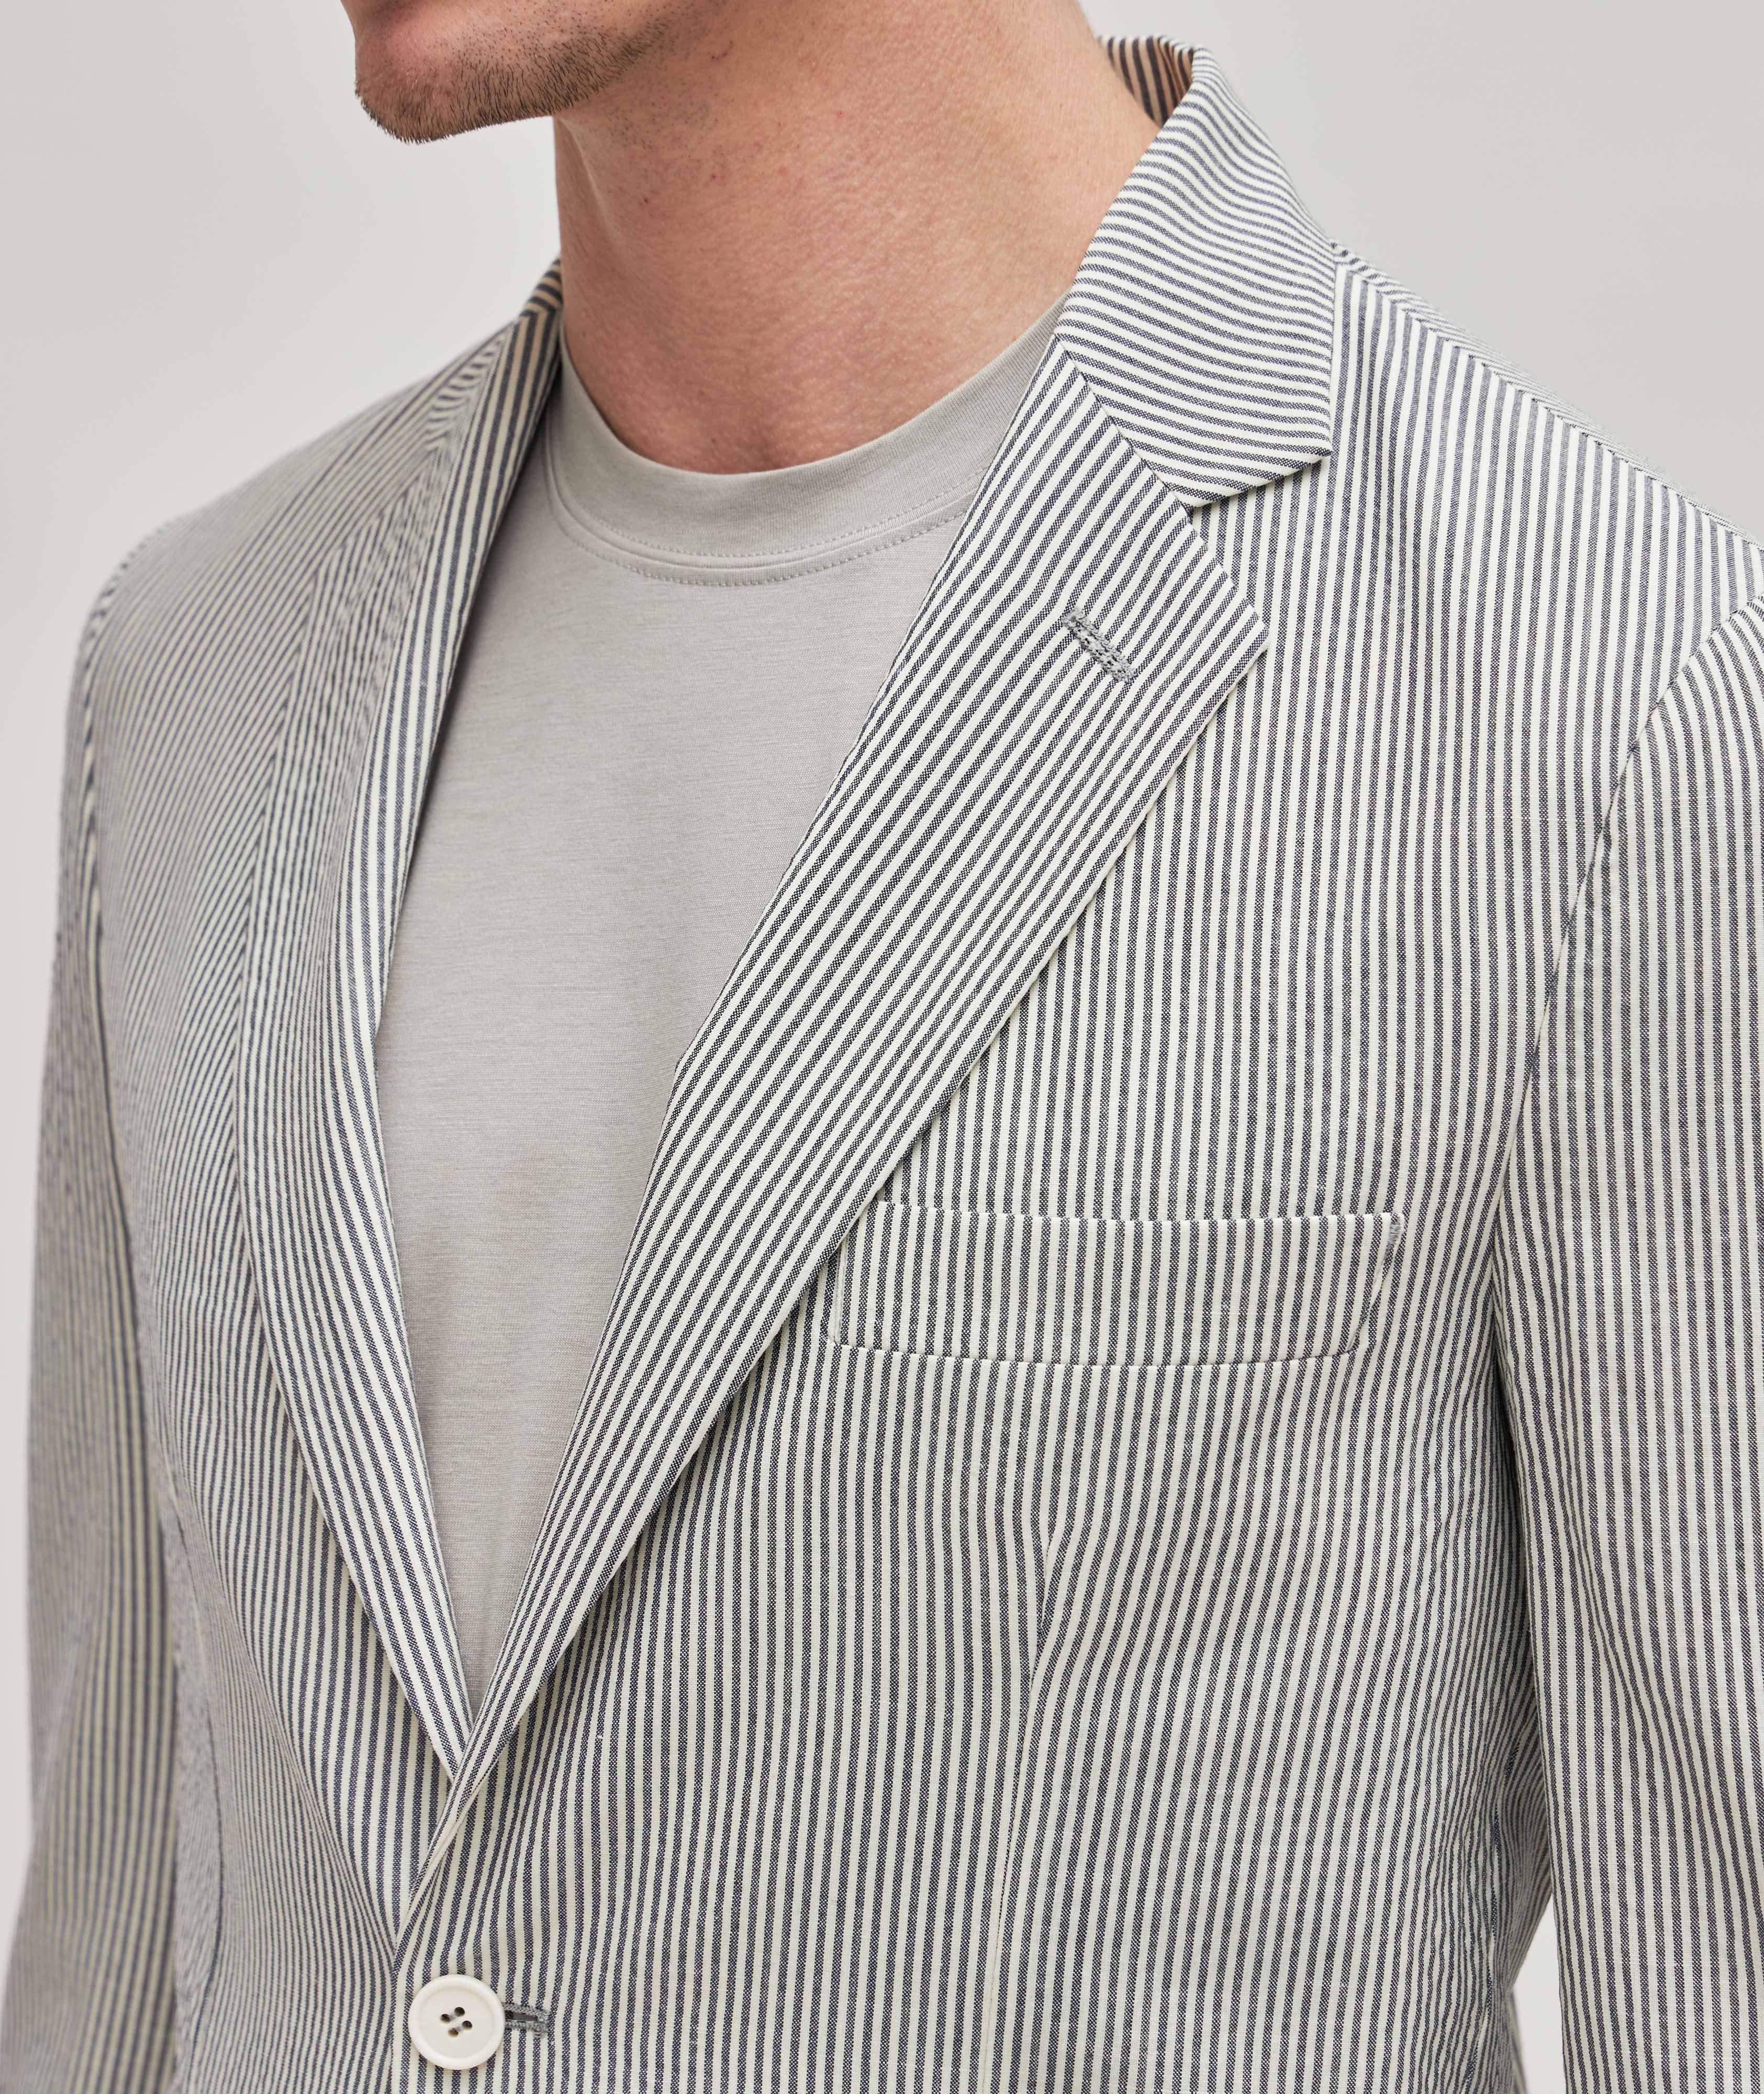 Seersucker Striped Shirt Jacket image 4